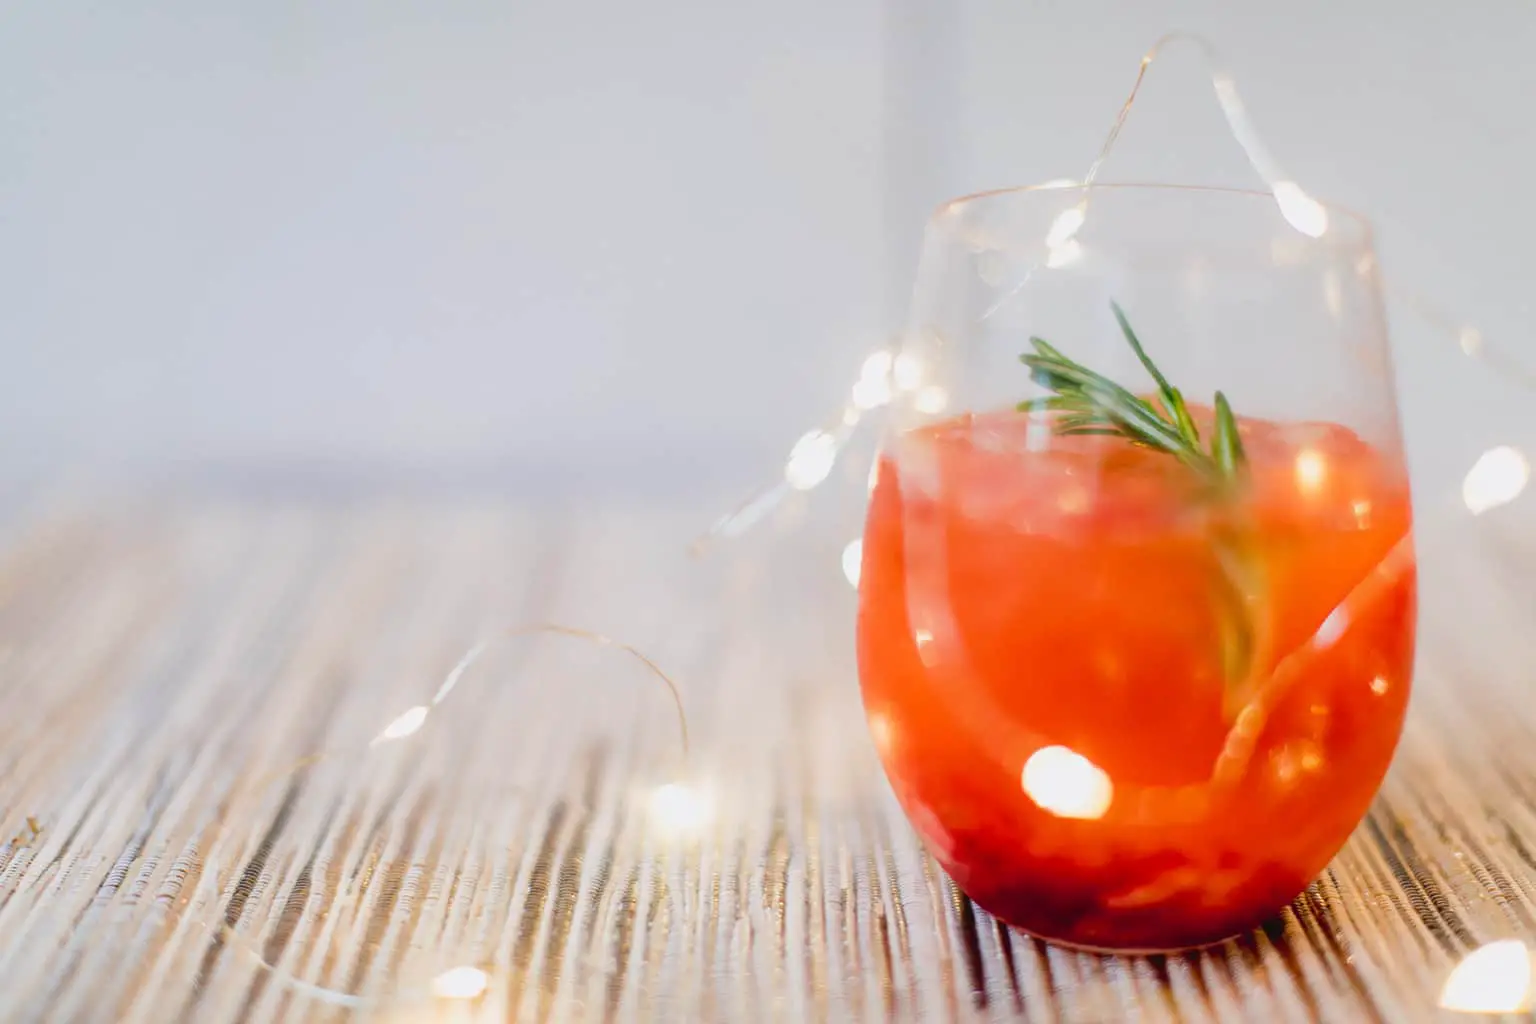 A glass of berryoska cocktail